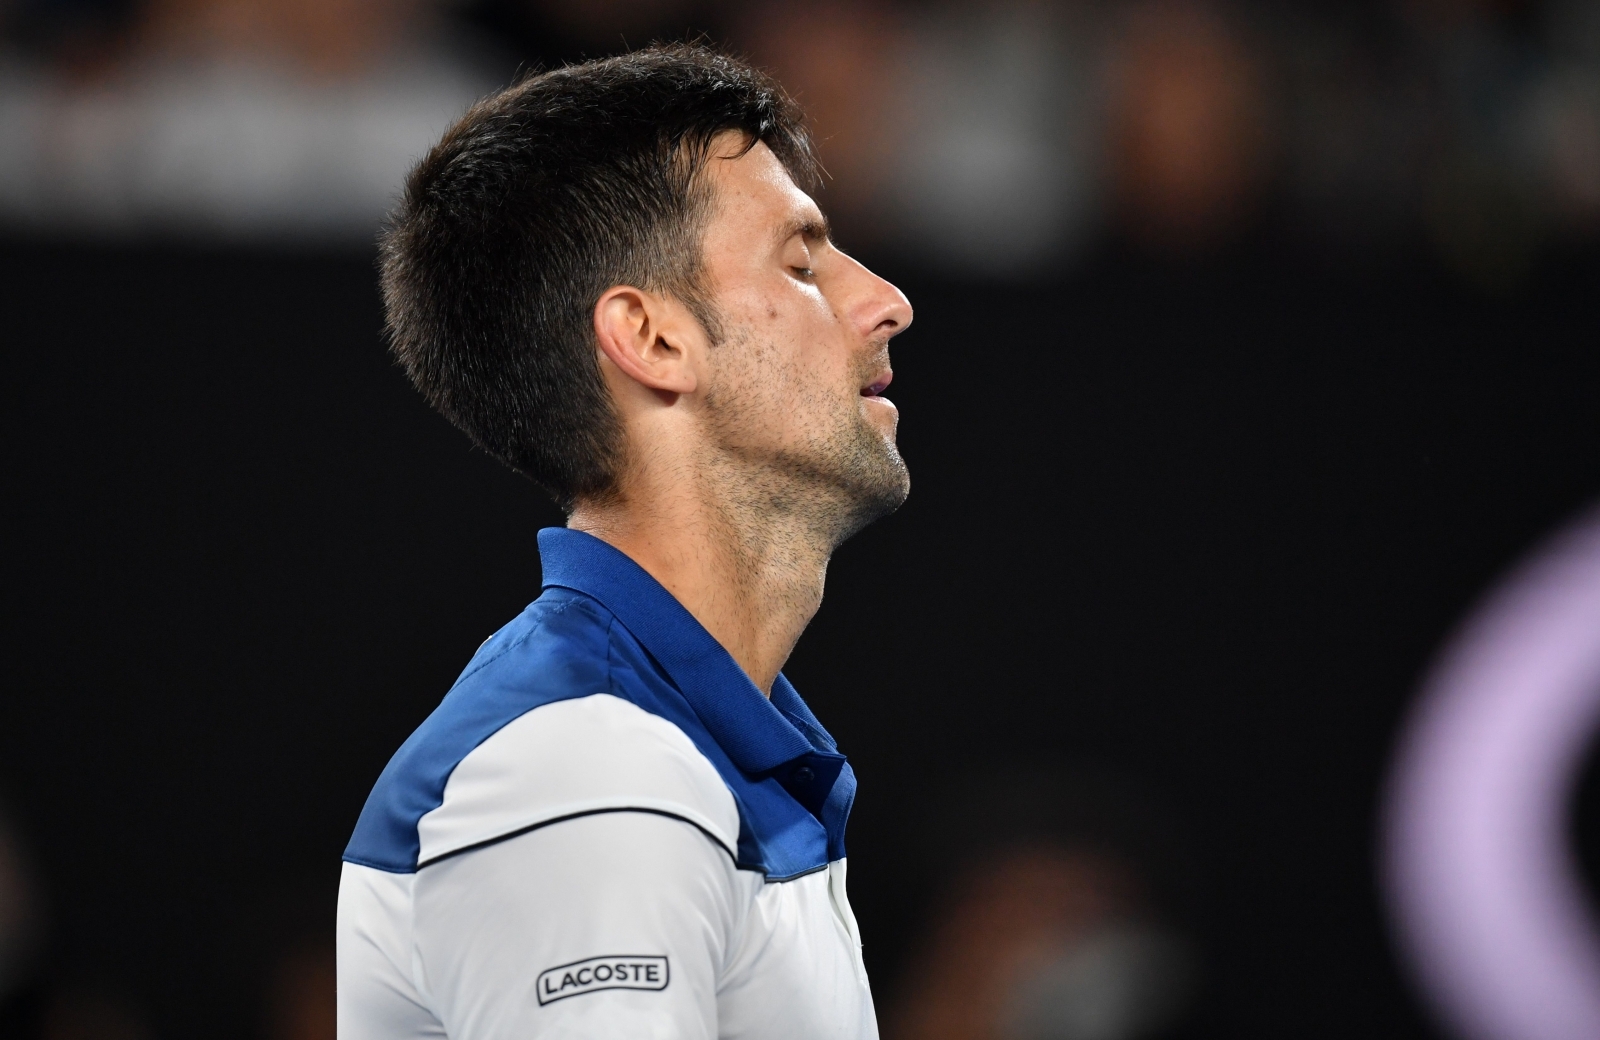 Novak Djokovic's shock return date confirmed after 'failings' following elbow surgery1600 x 1040